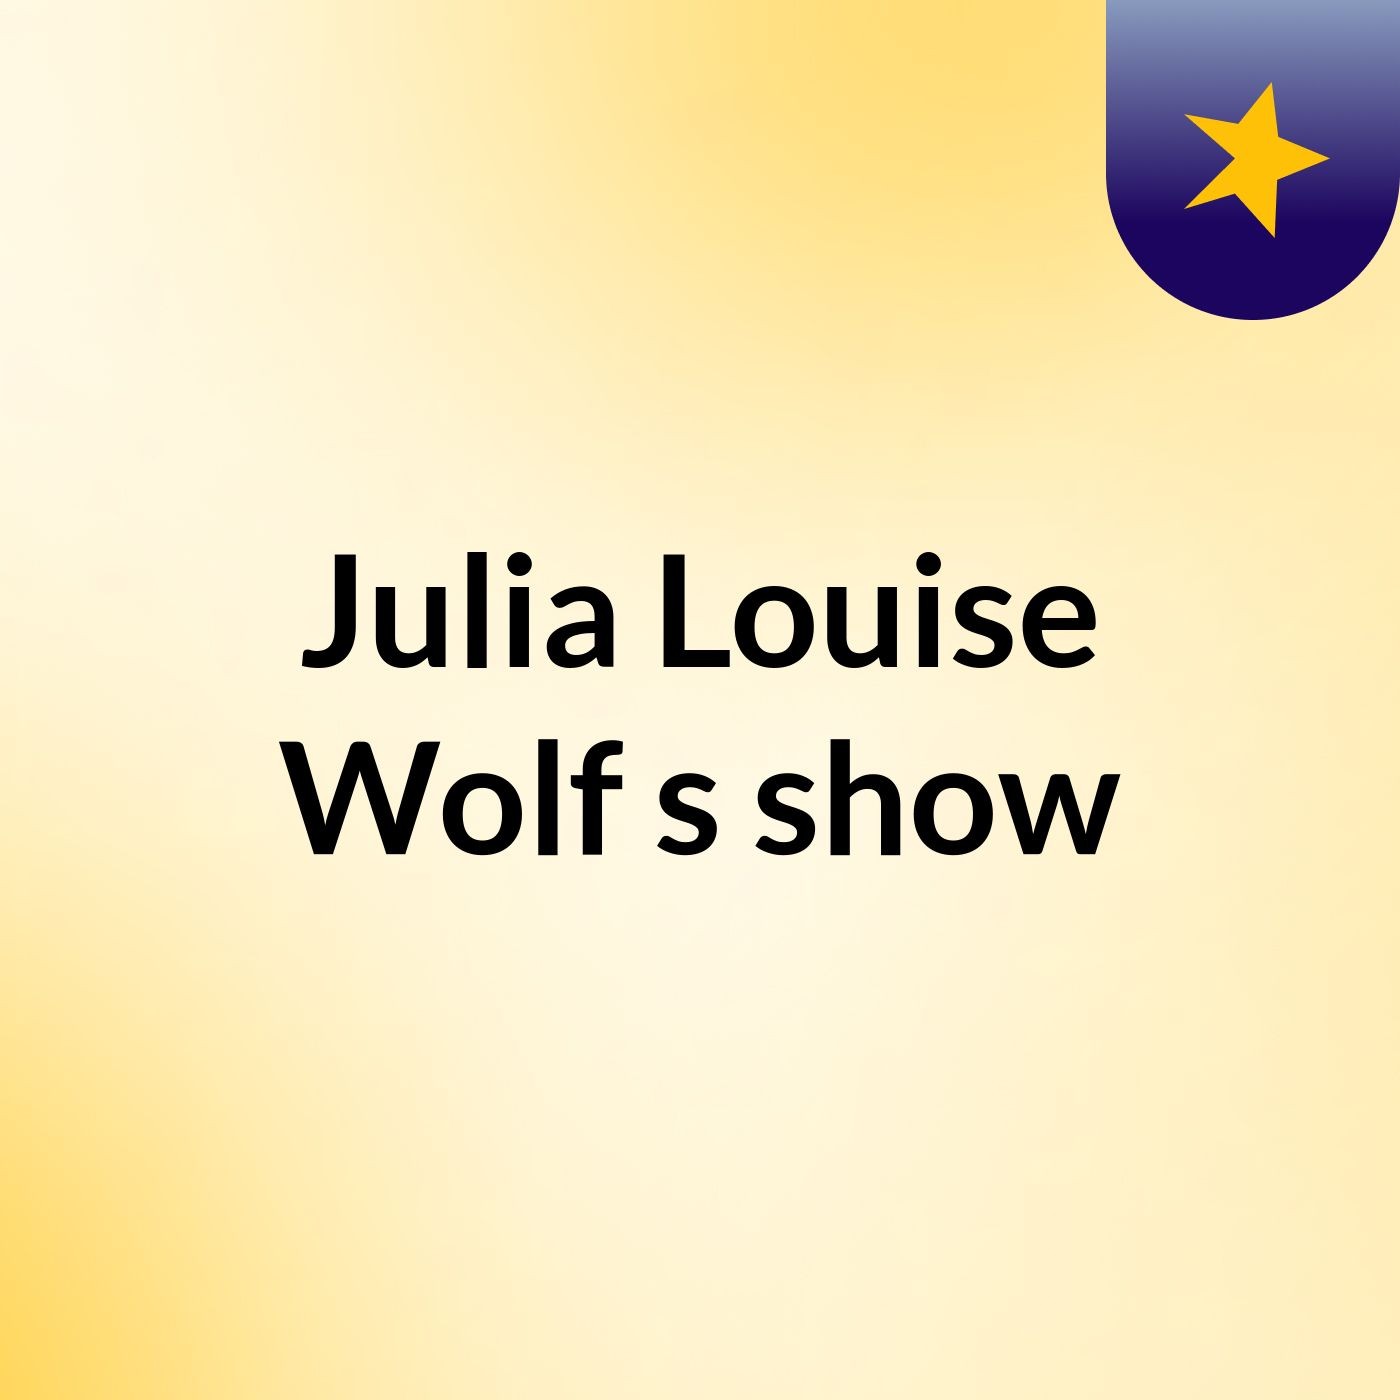 Julia Louise Wolf's show